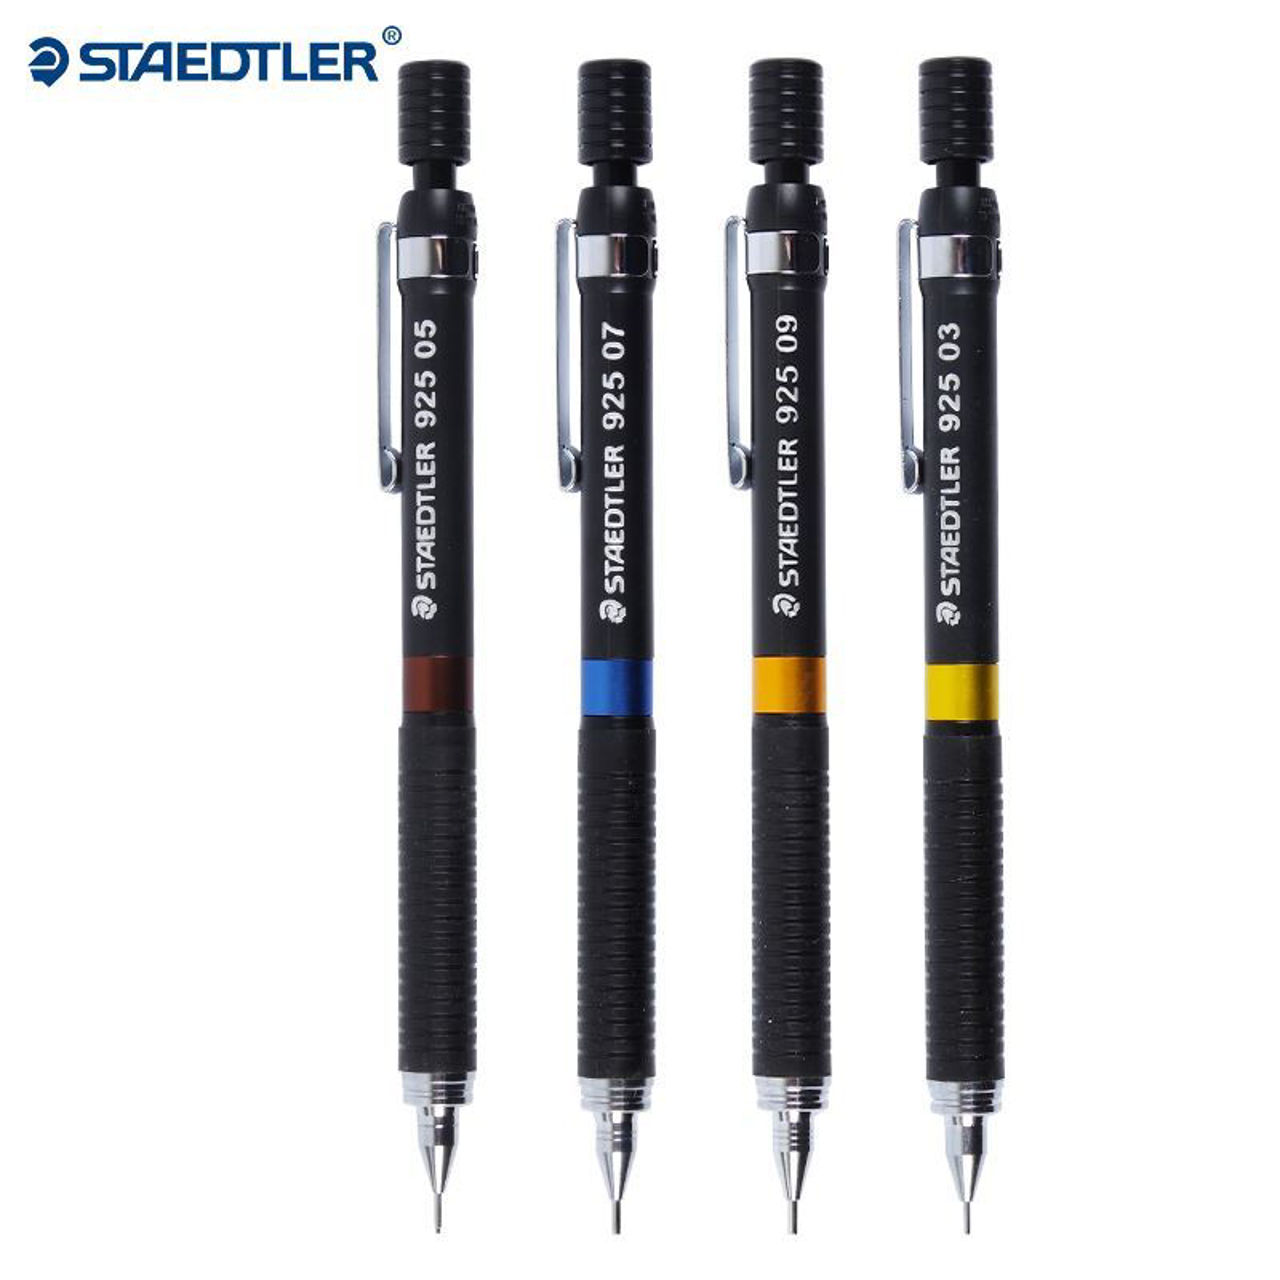 Staedtler Graphite 760 Mechanical Pencil 1.3mm